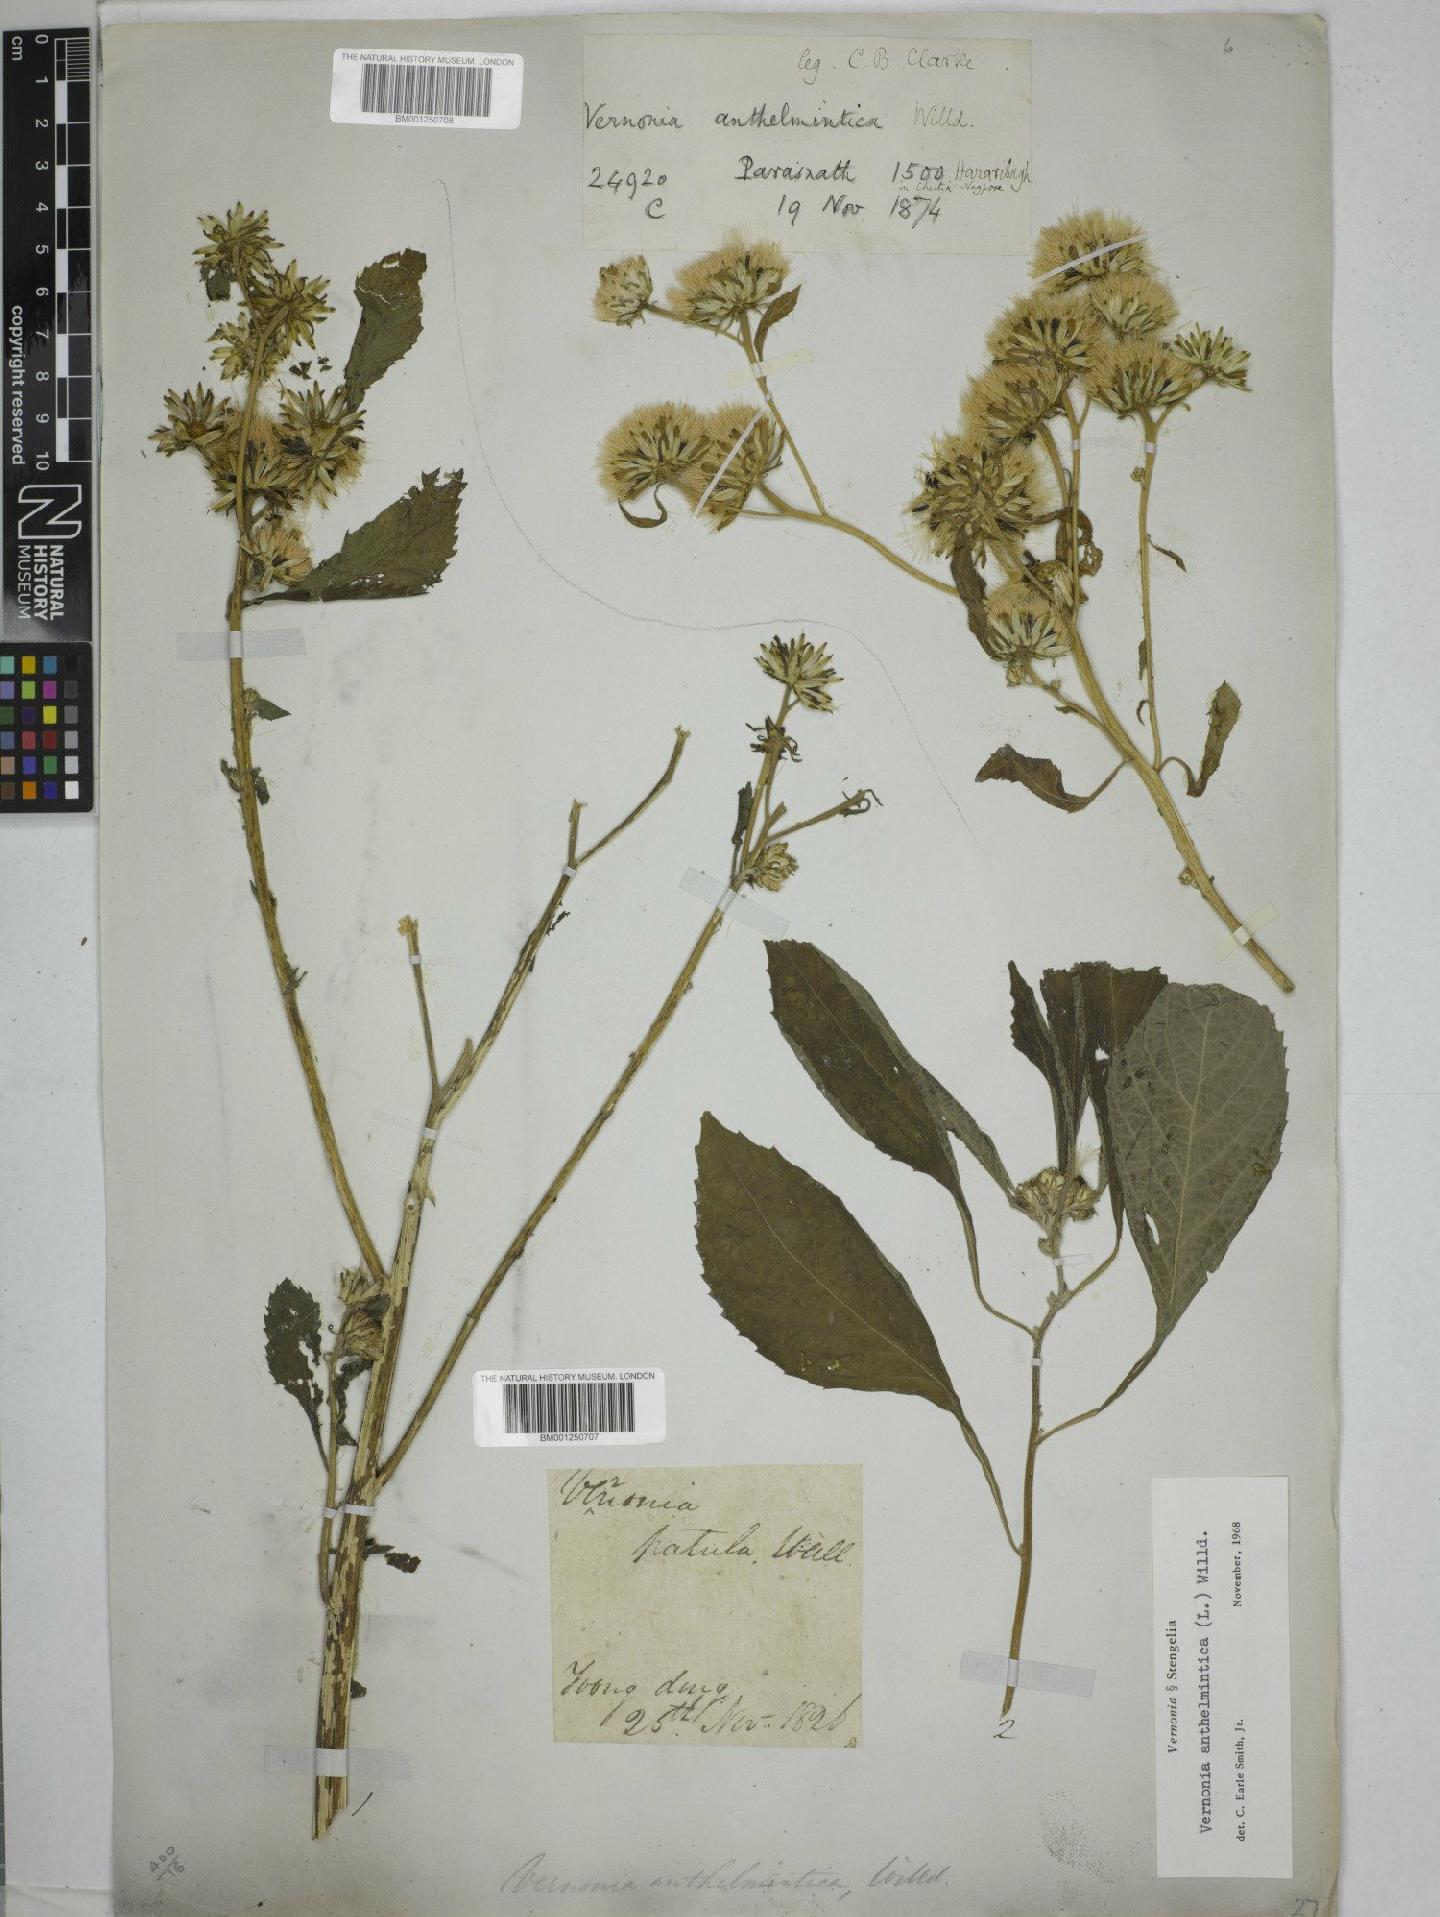 To NHMUK collection (Vernonia anthelmintica (L.) Willd.; NHMUK:ecatalogue:9150785)